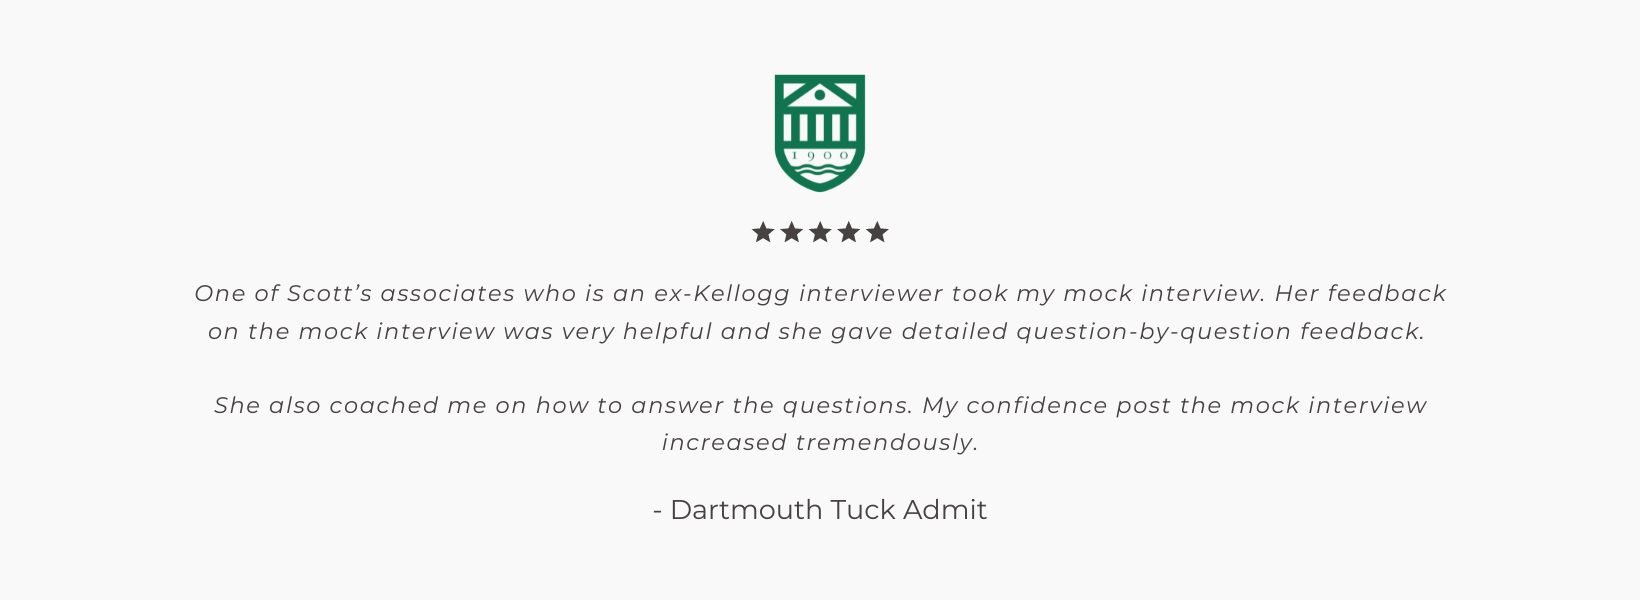 Dartmouth Tuck MBA Client Testimonial